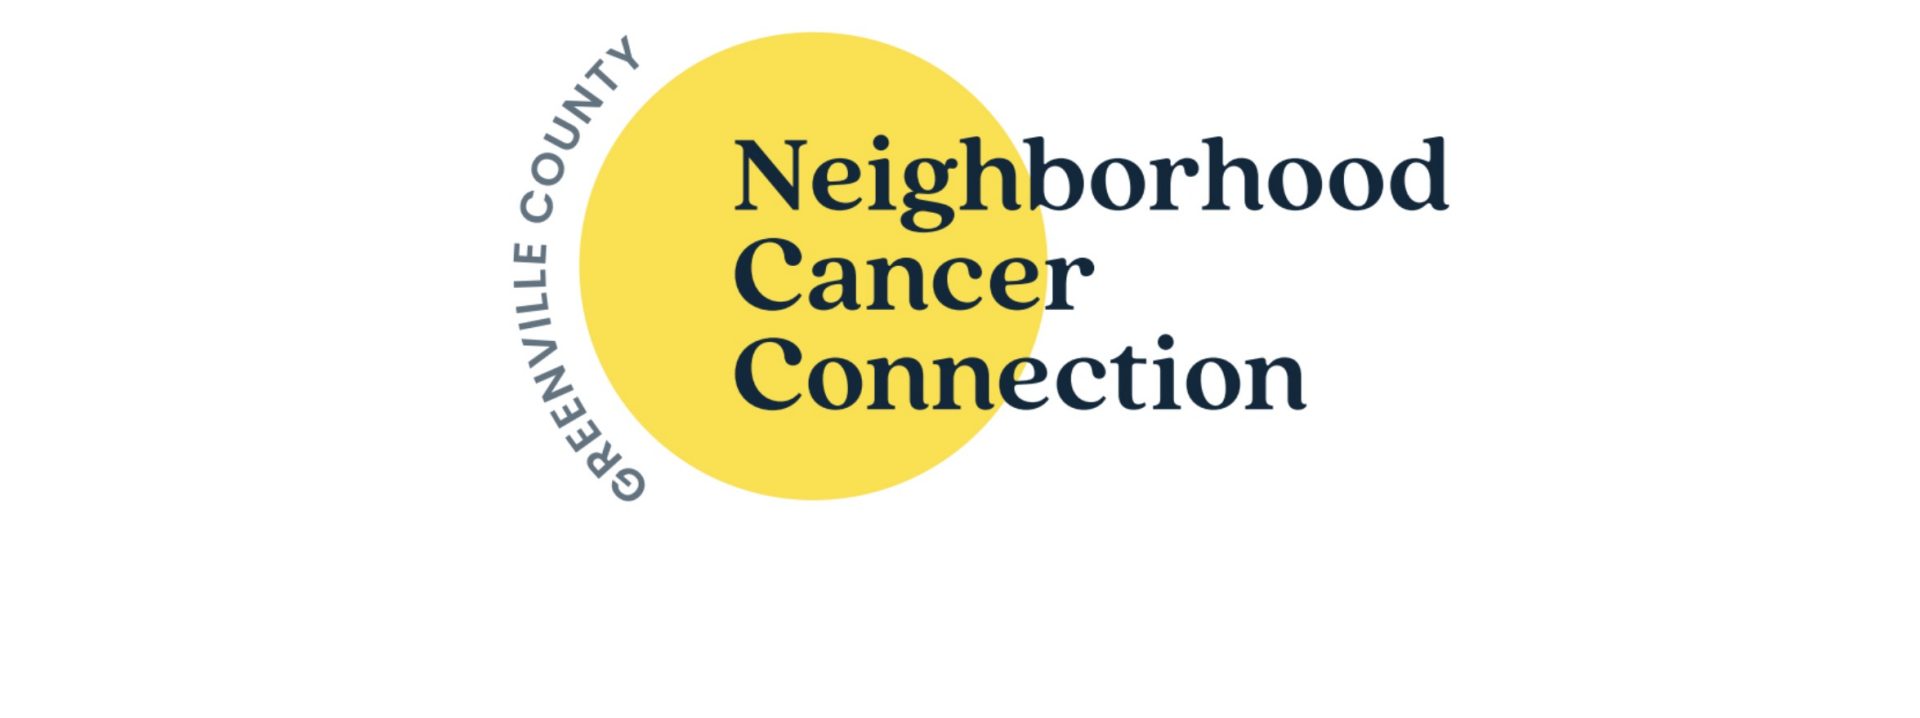 Neighborhood Cancer Connection